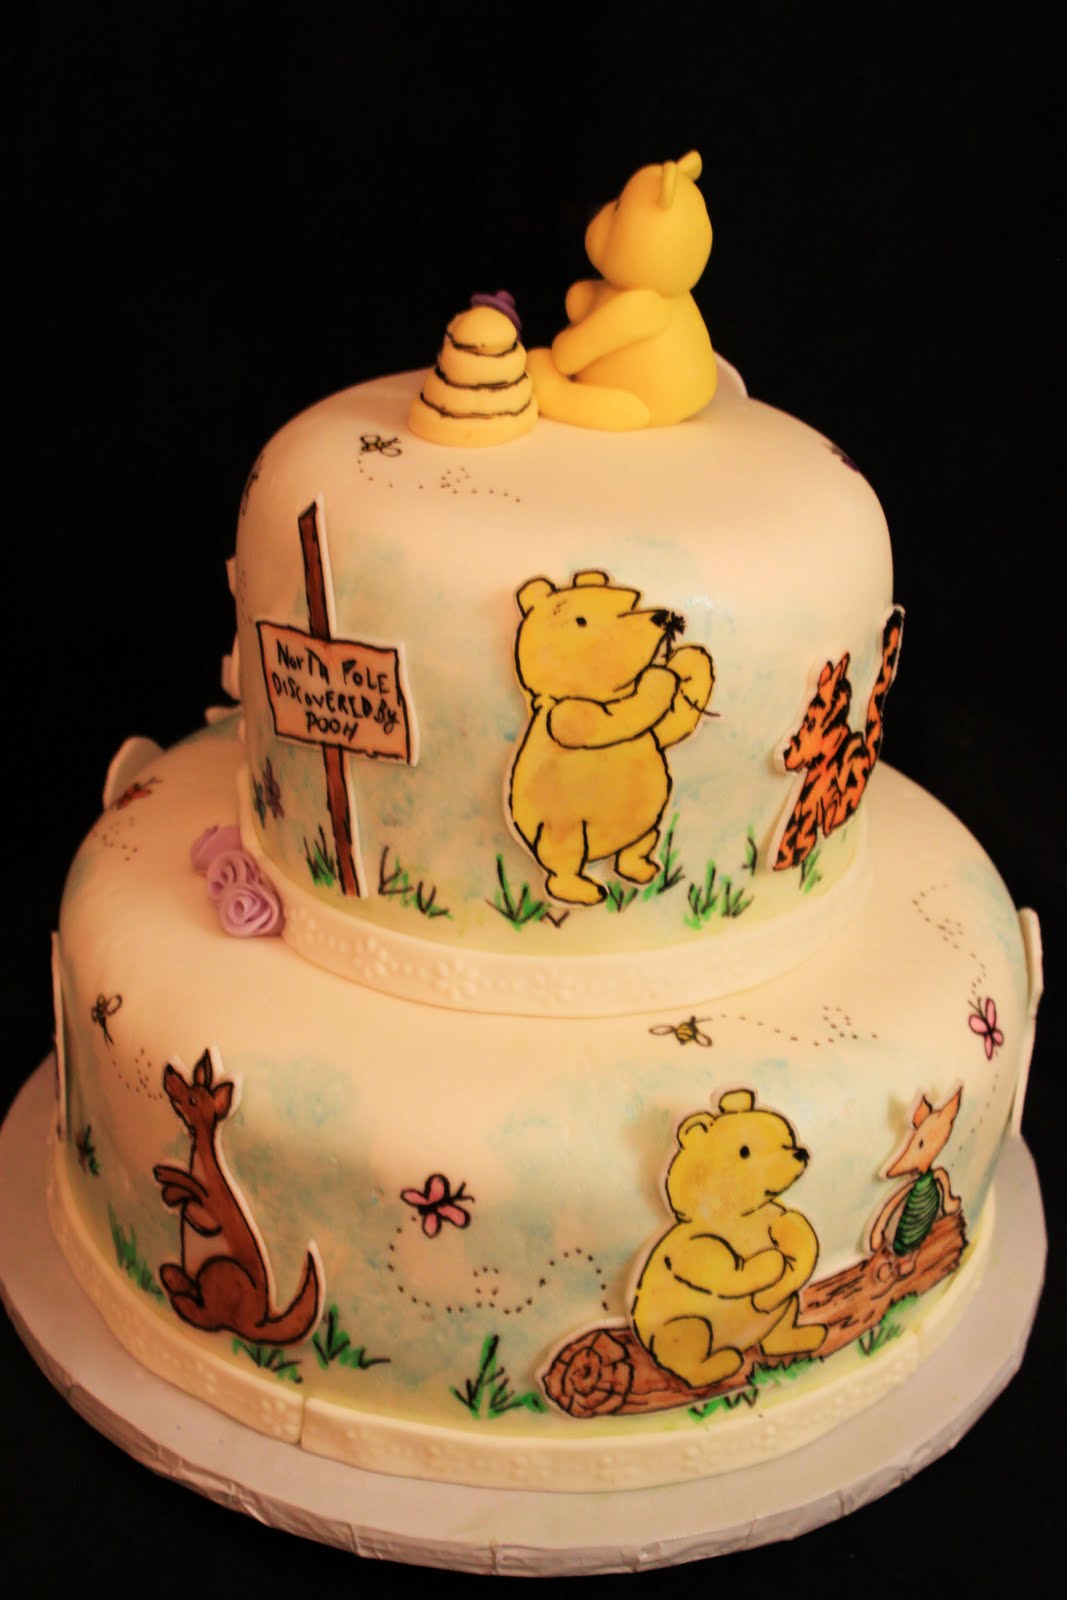 Layers of Love: Hand Drawn Winnie the Pooh cake